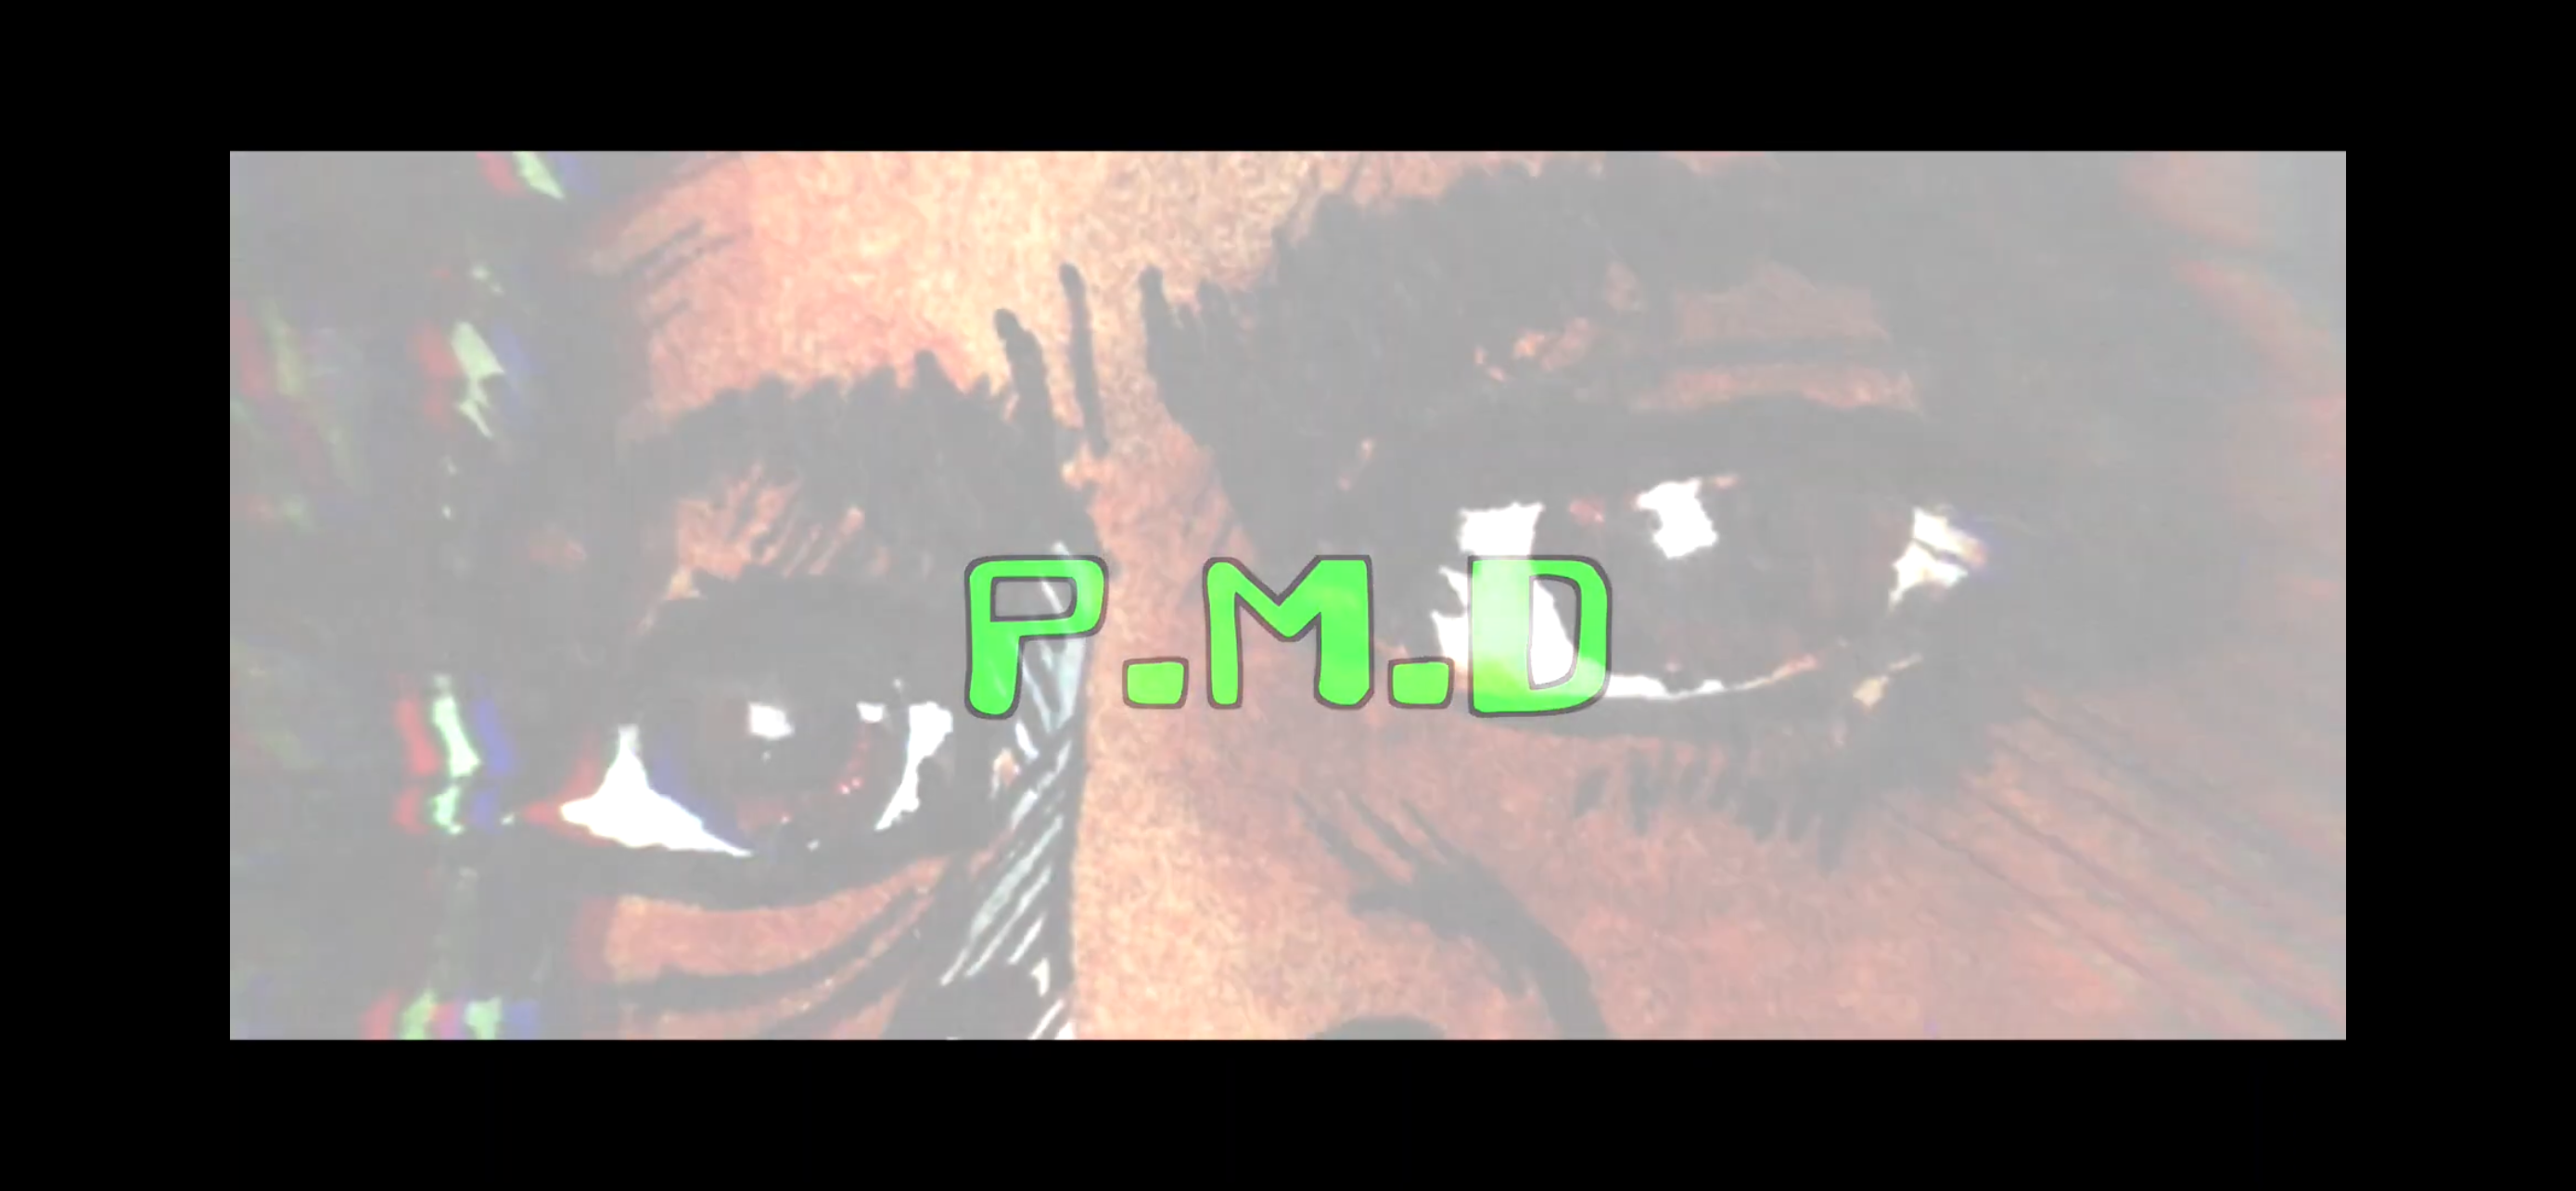 BlackLiq "PMD" Official Music Video